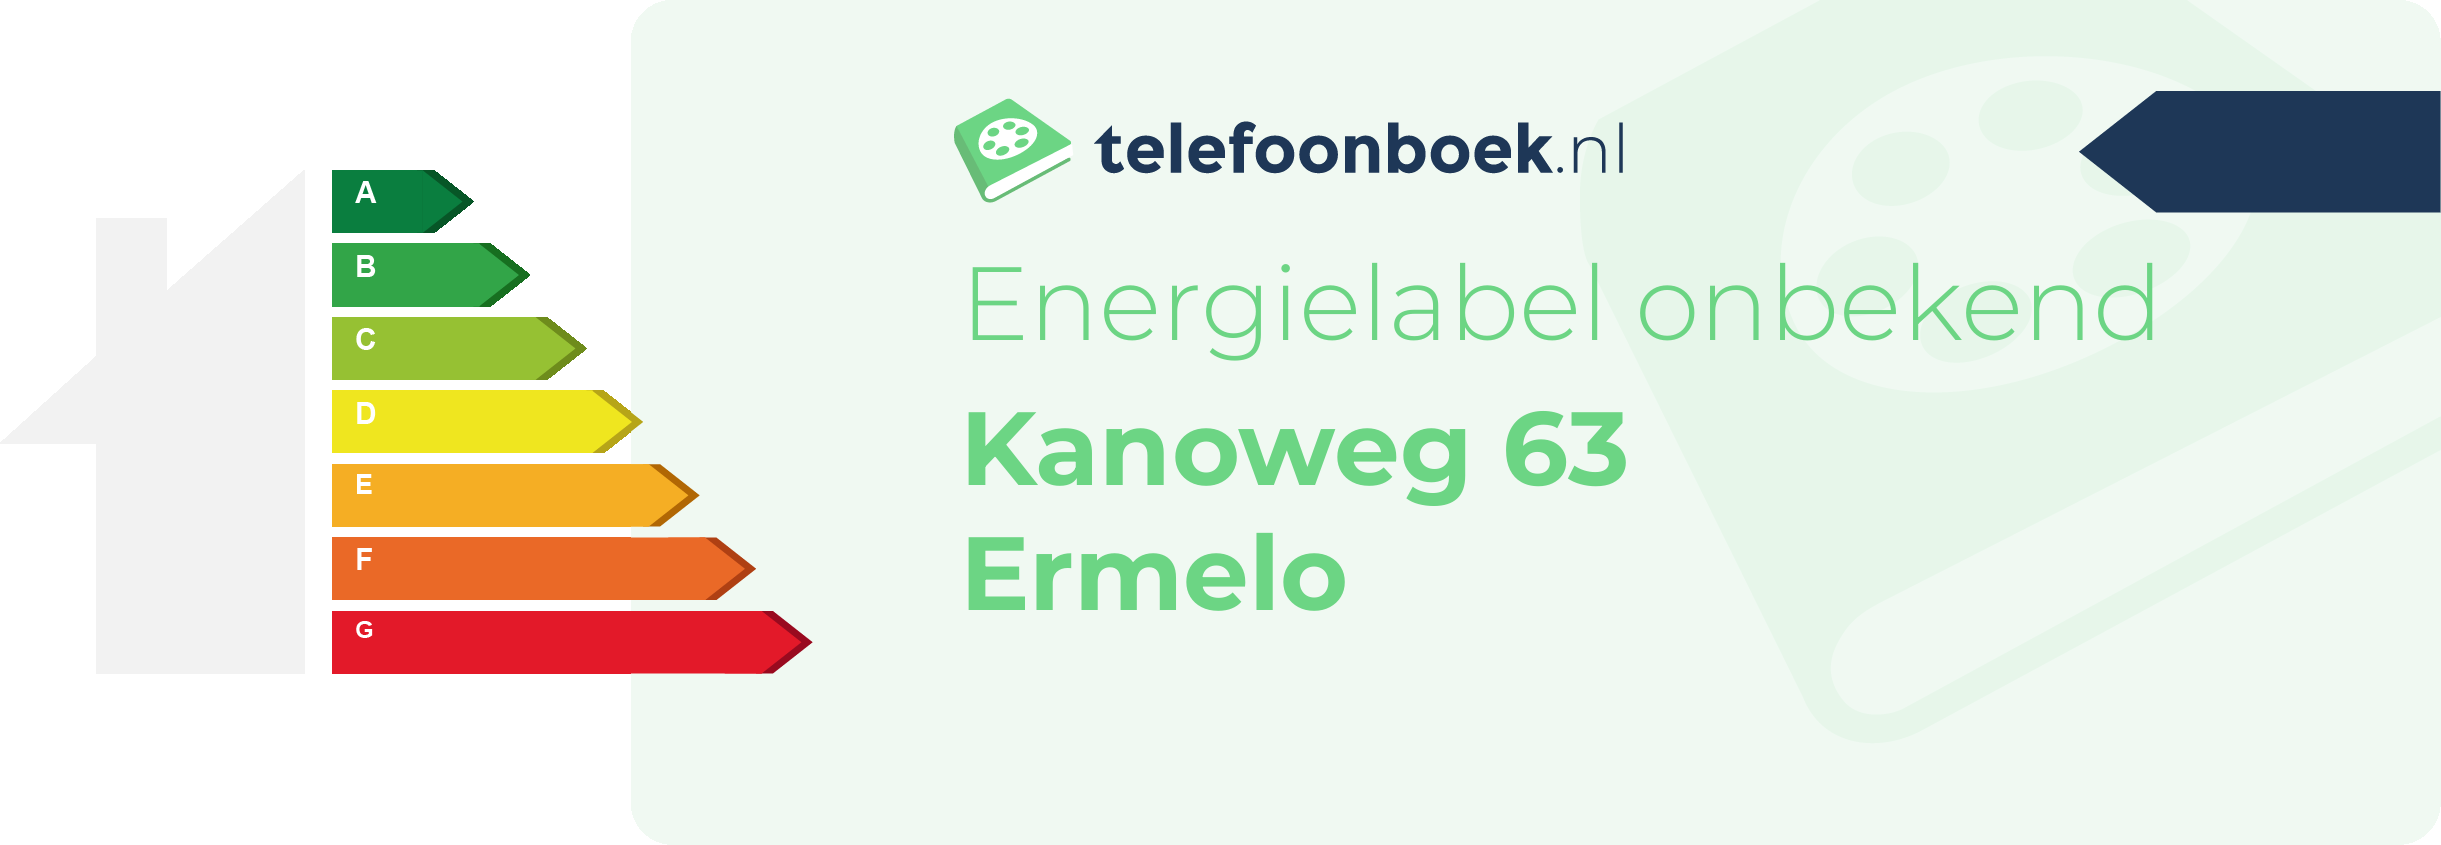 Energielabel Kanoweg 63 Ermelo